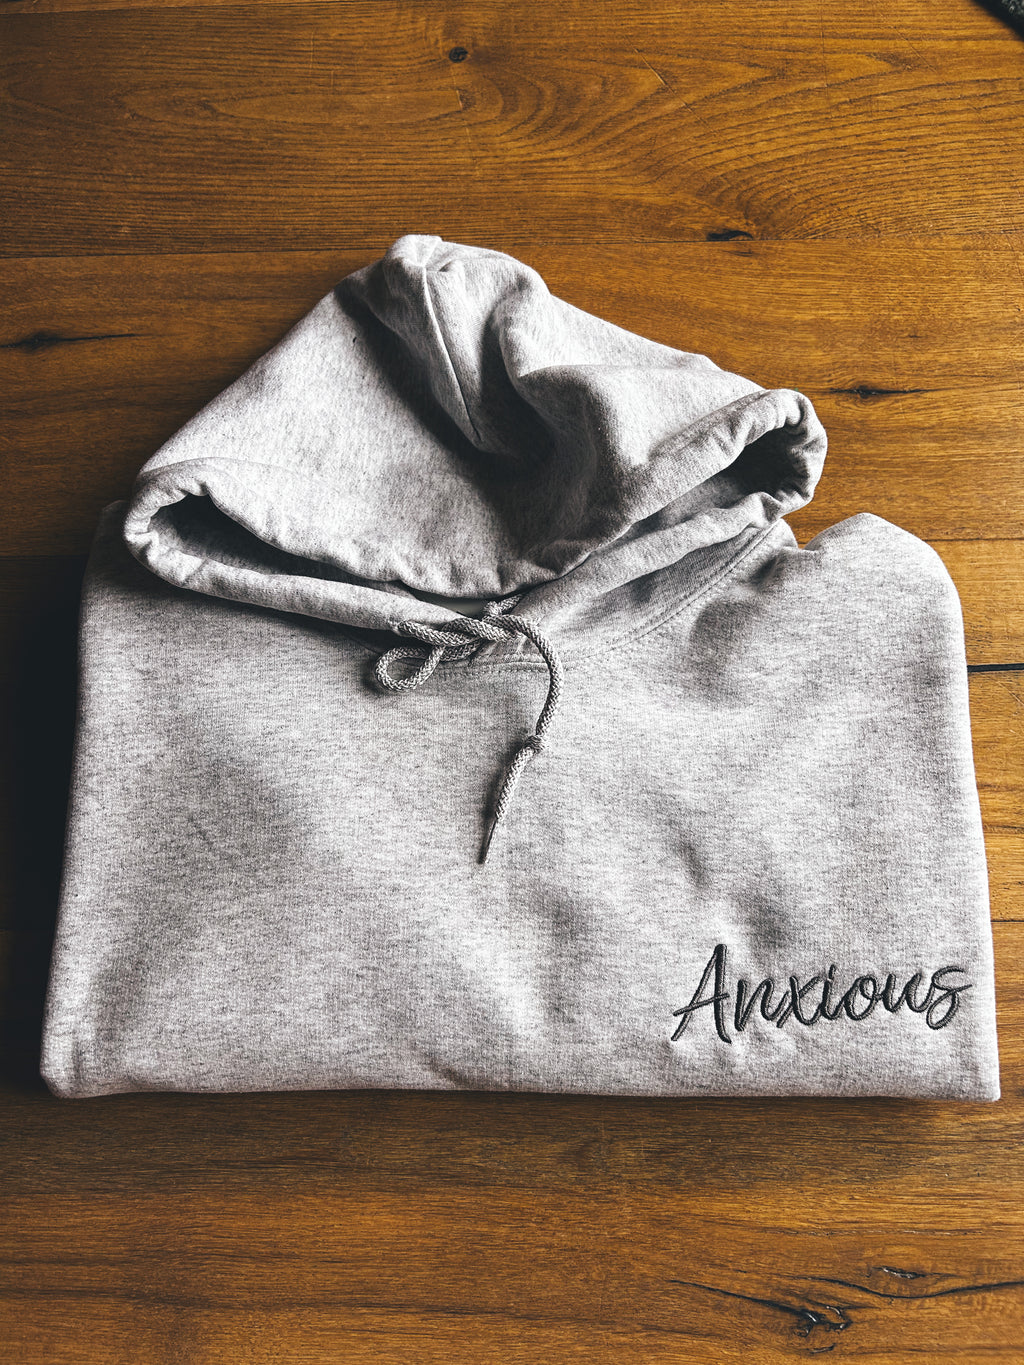 Anxious Sweatshirt/Sleeve Quote